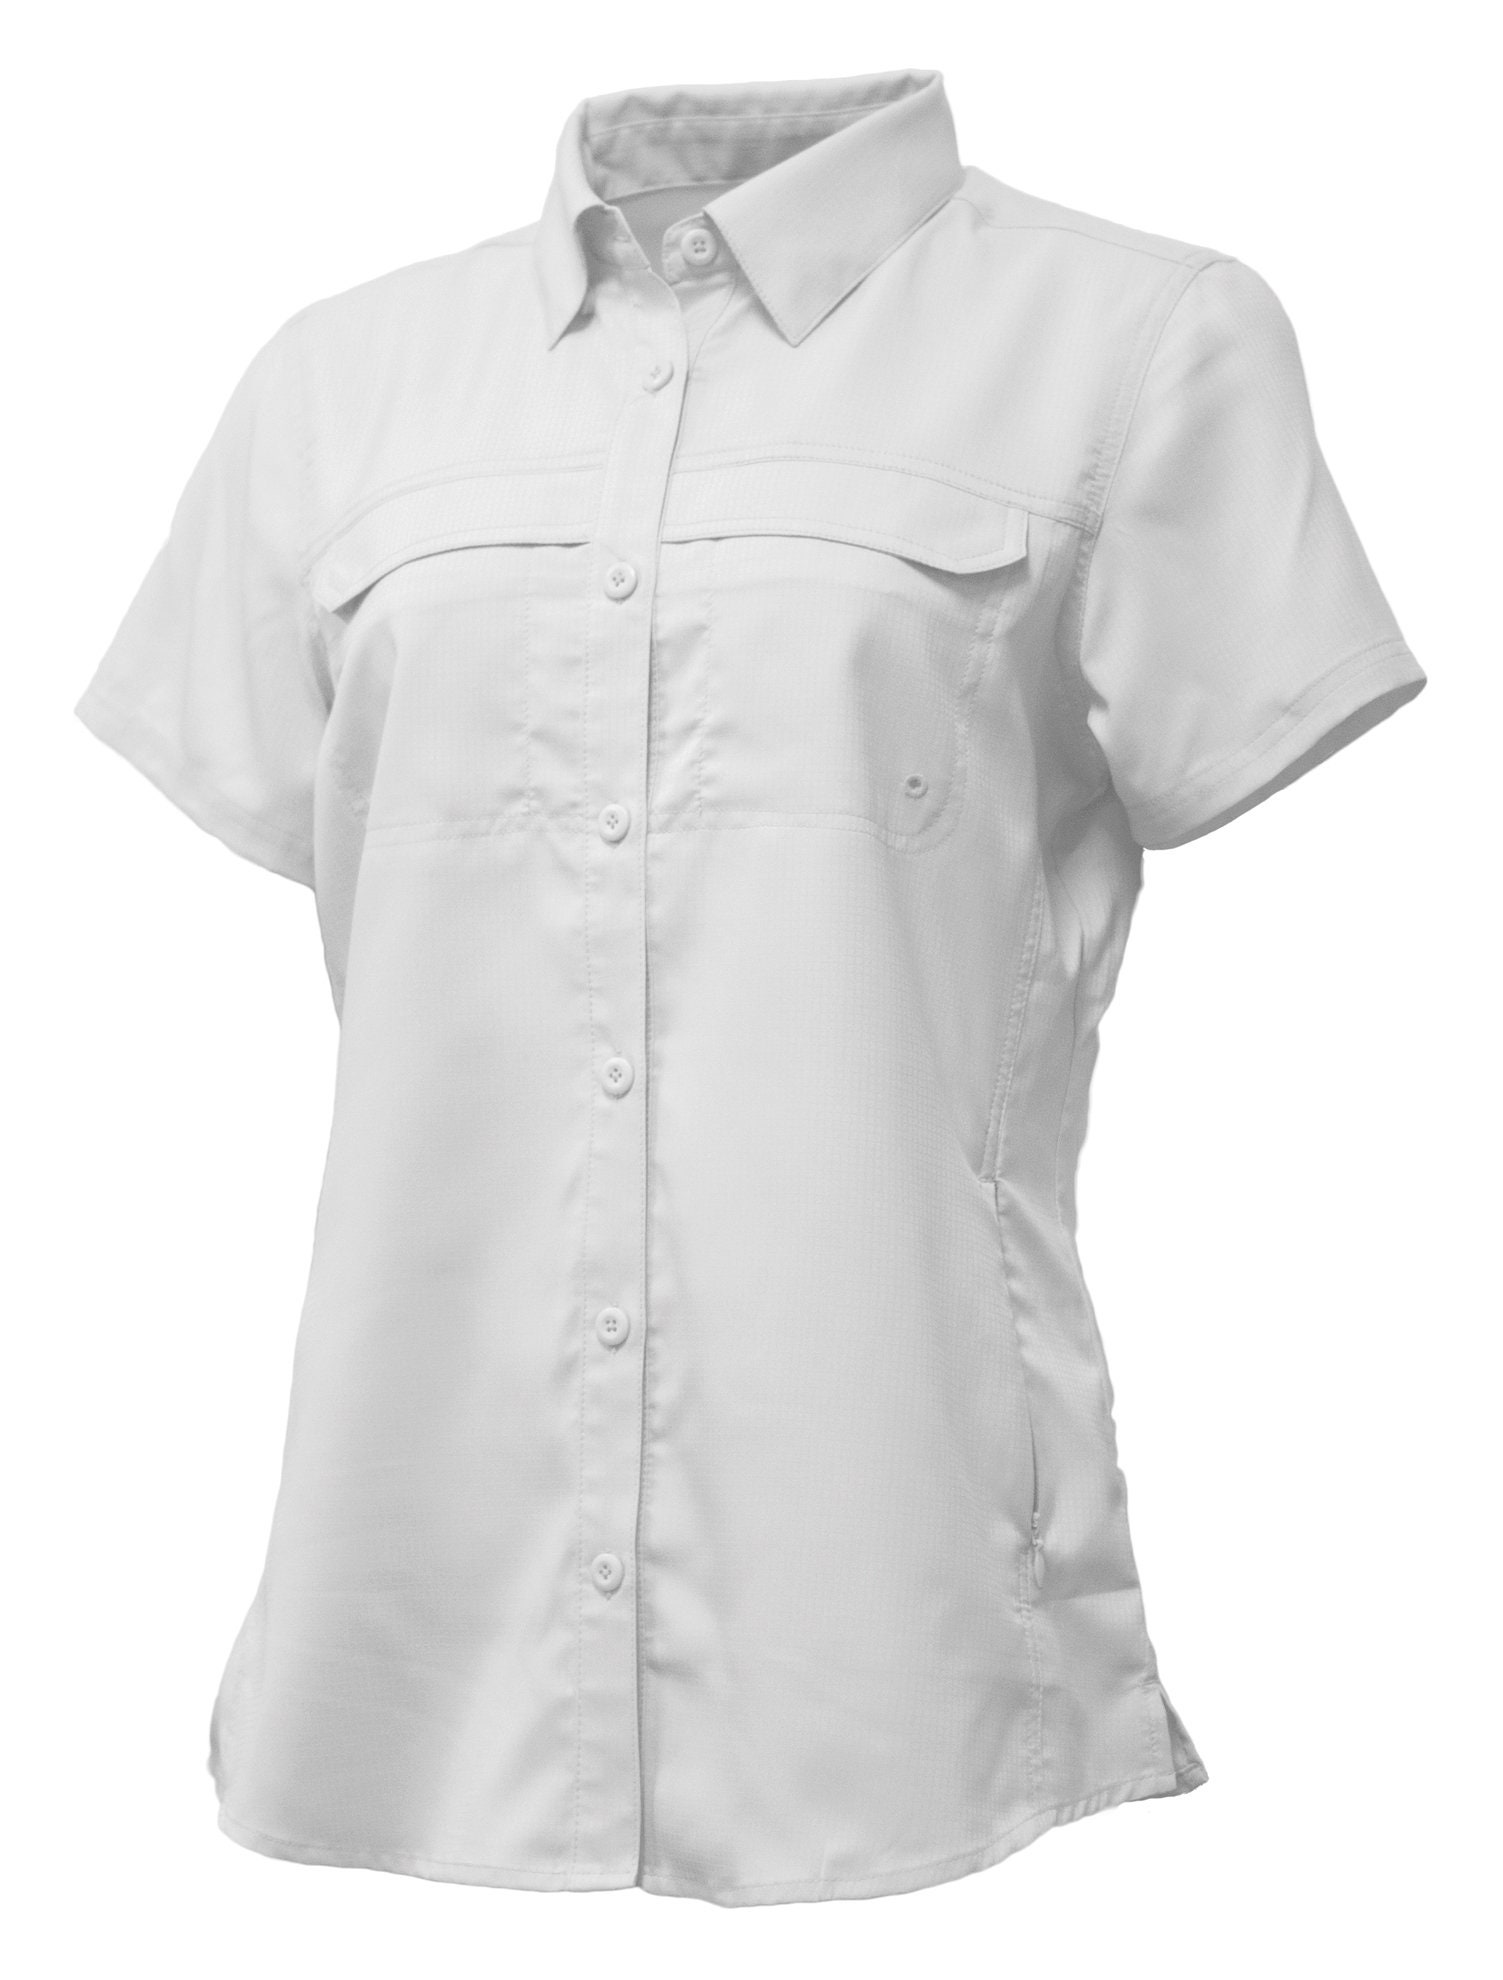 Fishing Shirt, Ladies Sublimation Fishing Shirt, Blank Shirt, Short Sleeve  Fishing Shirt, Shirt for Her -  Canada